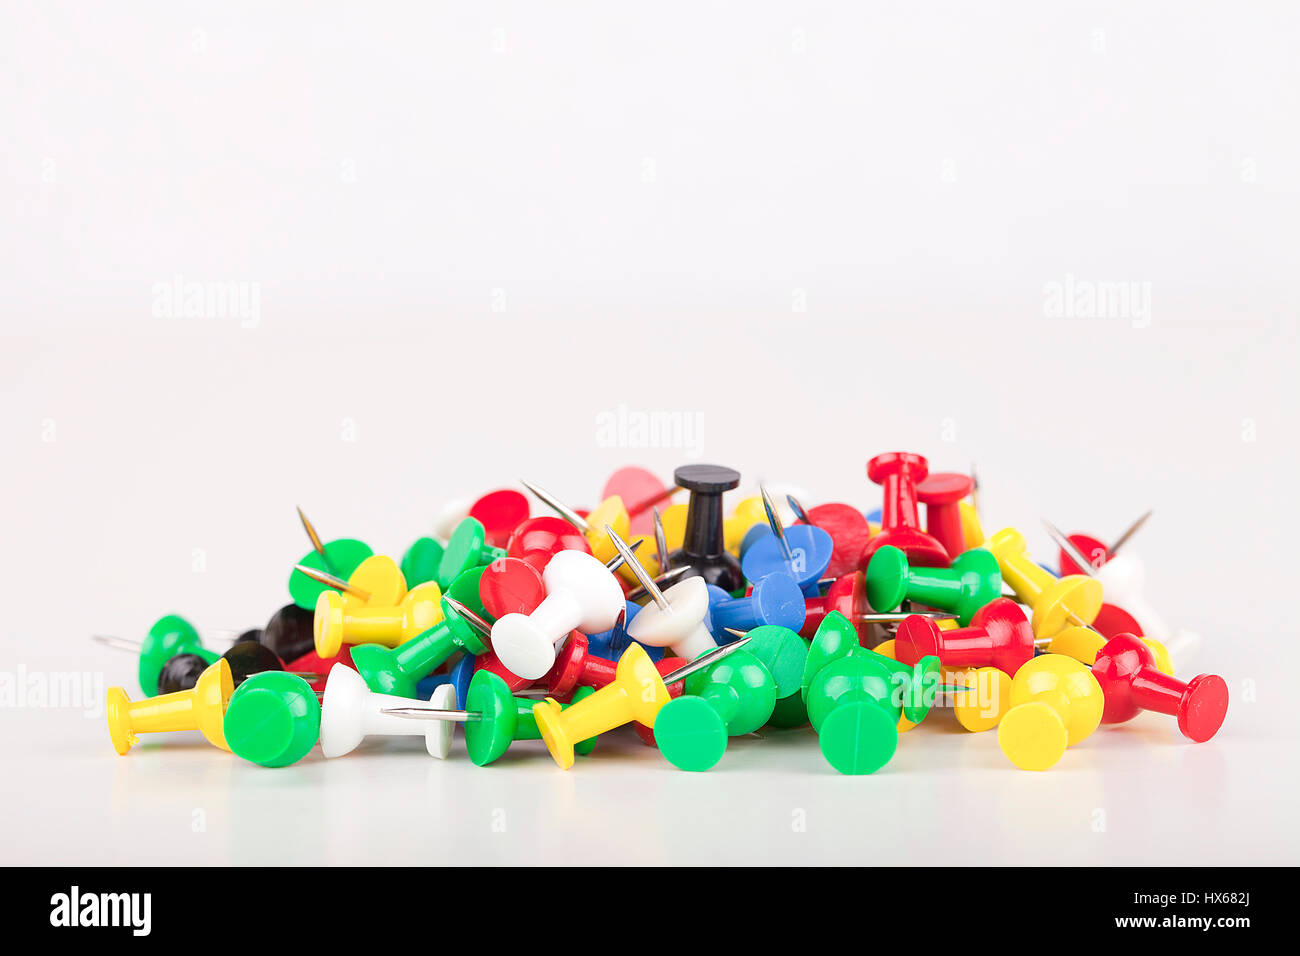 Pile of colorful pushpins on a white surface. Pile of thumbtacks isolated on white background. Stock Photo